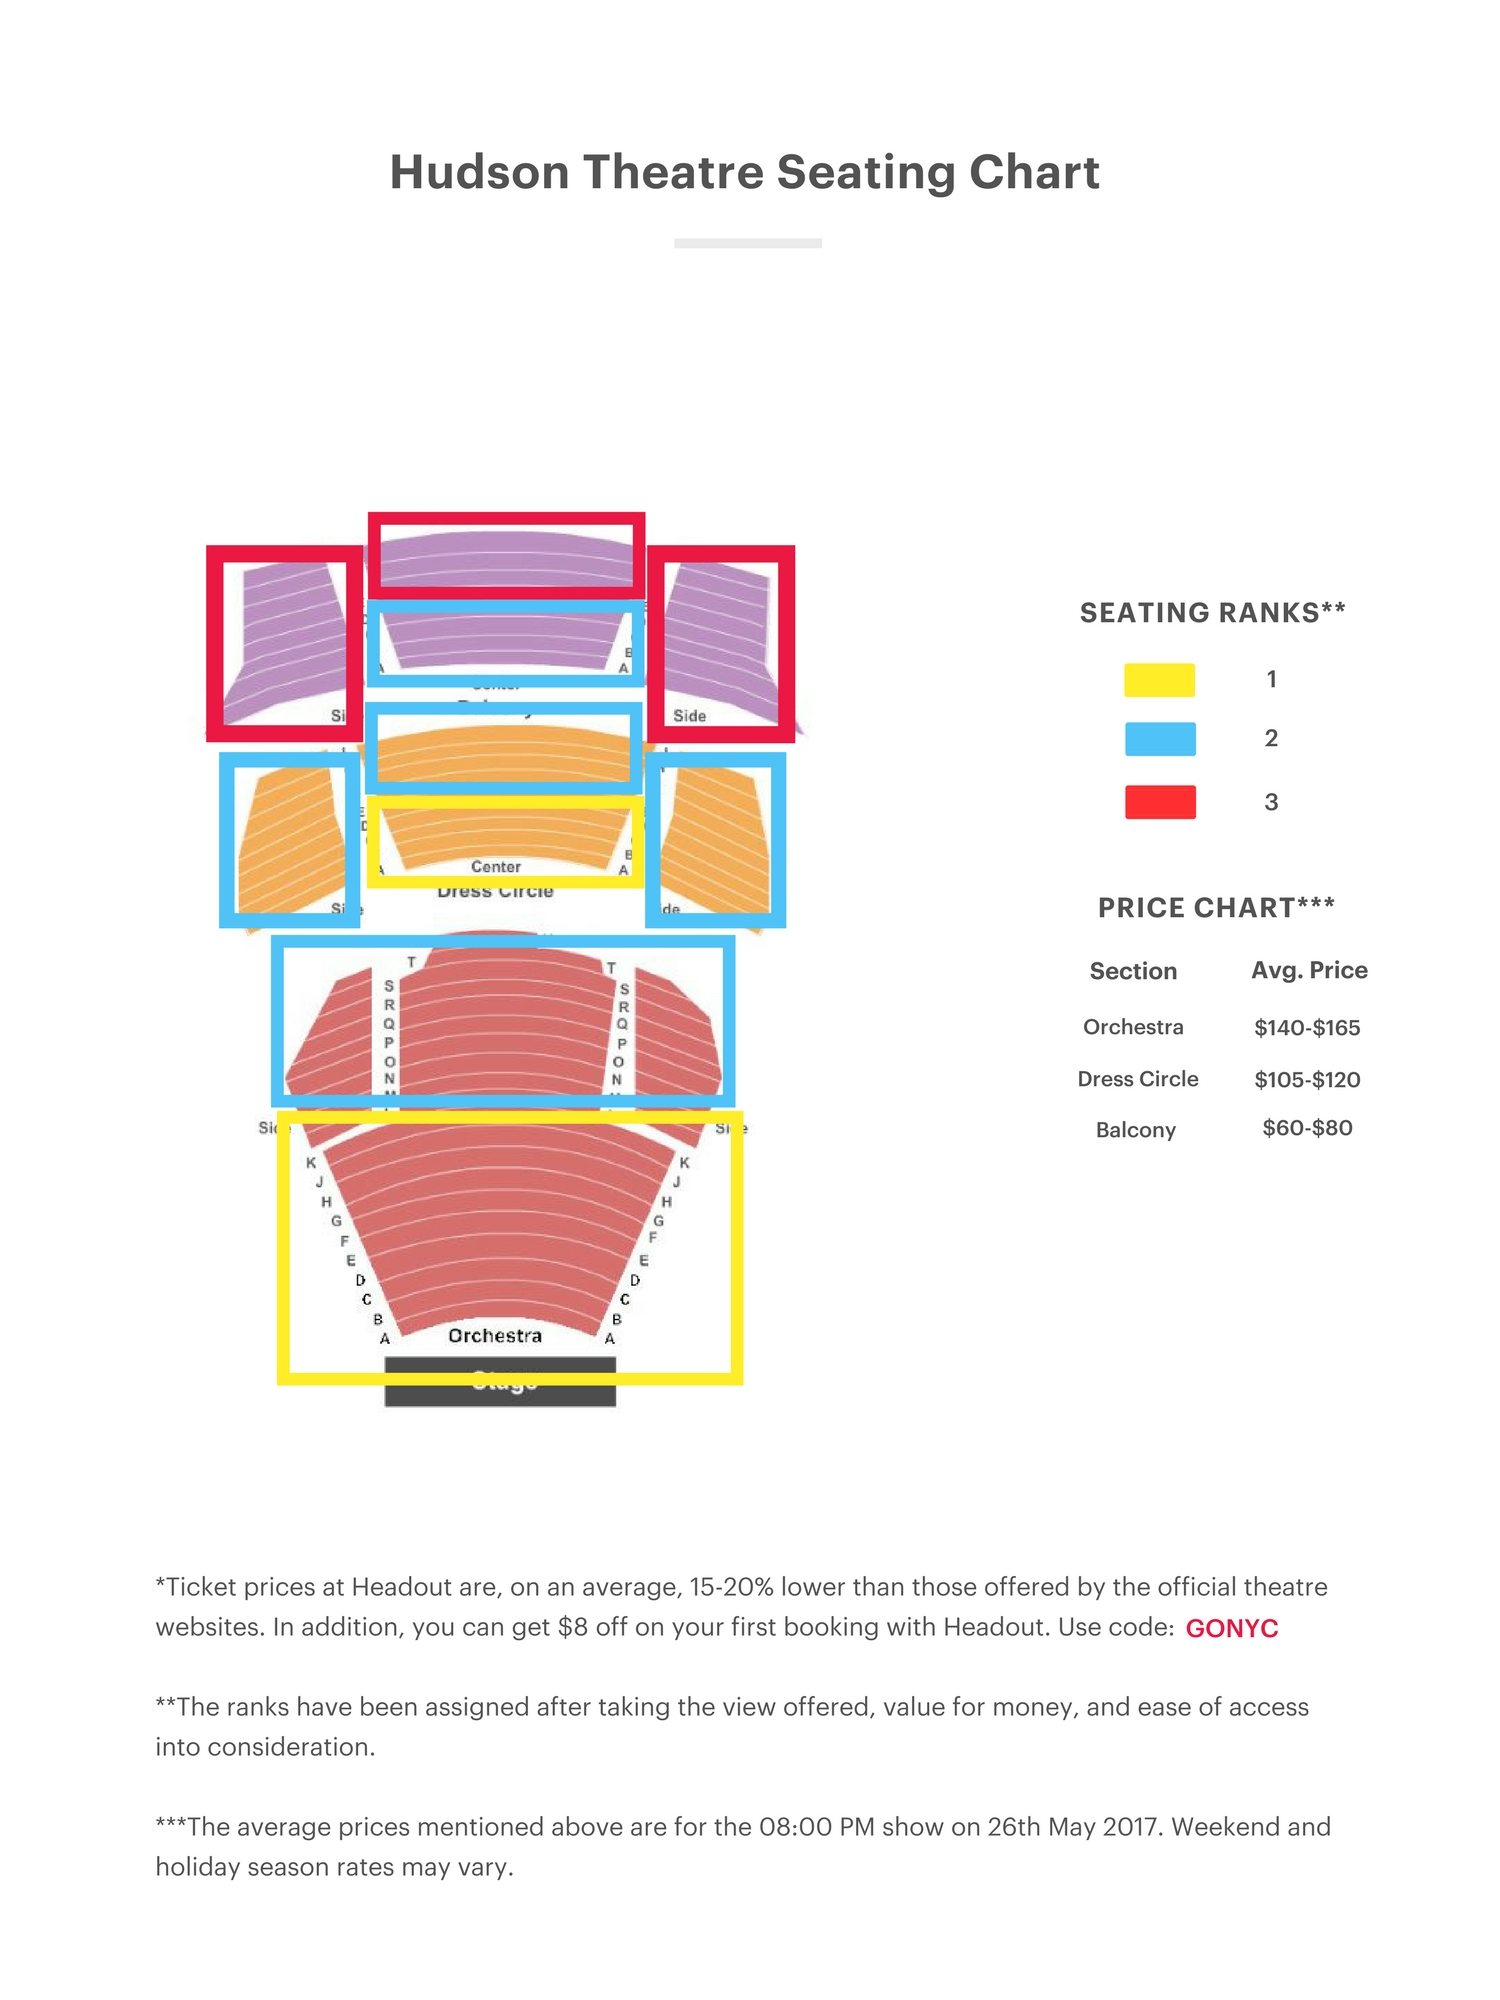 Hudson Theater Broadway Seating Chart